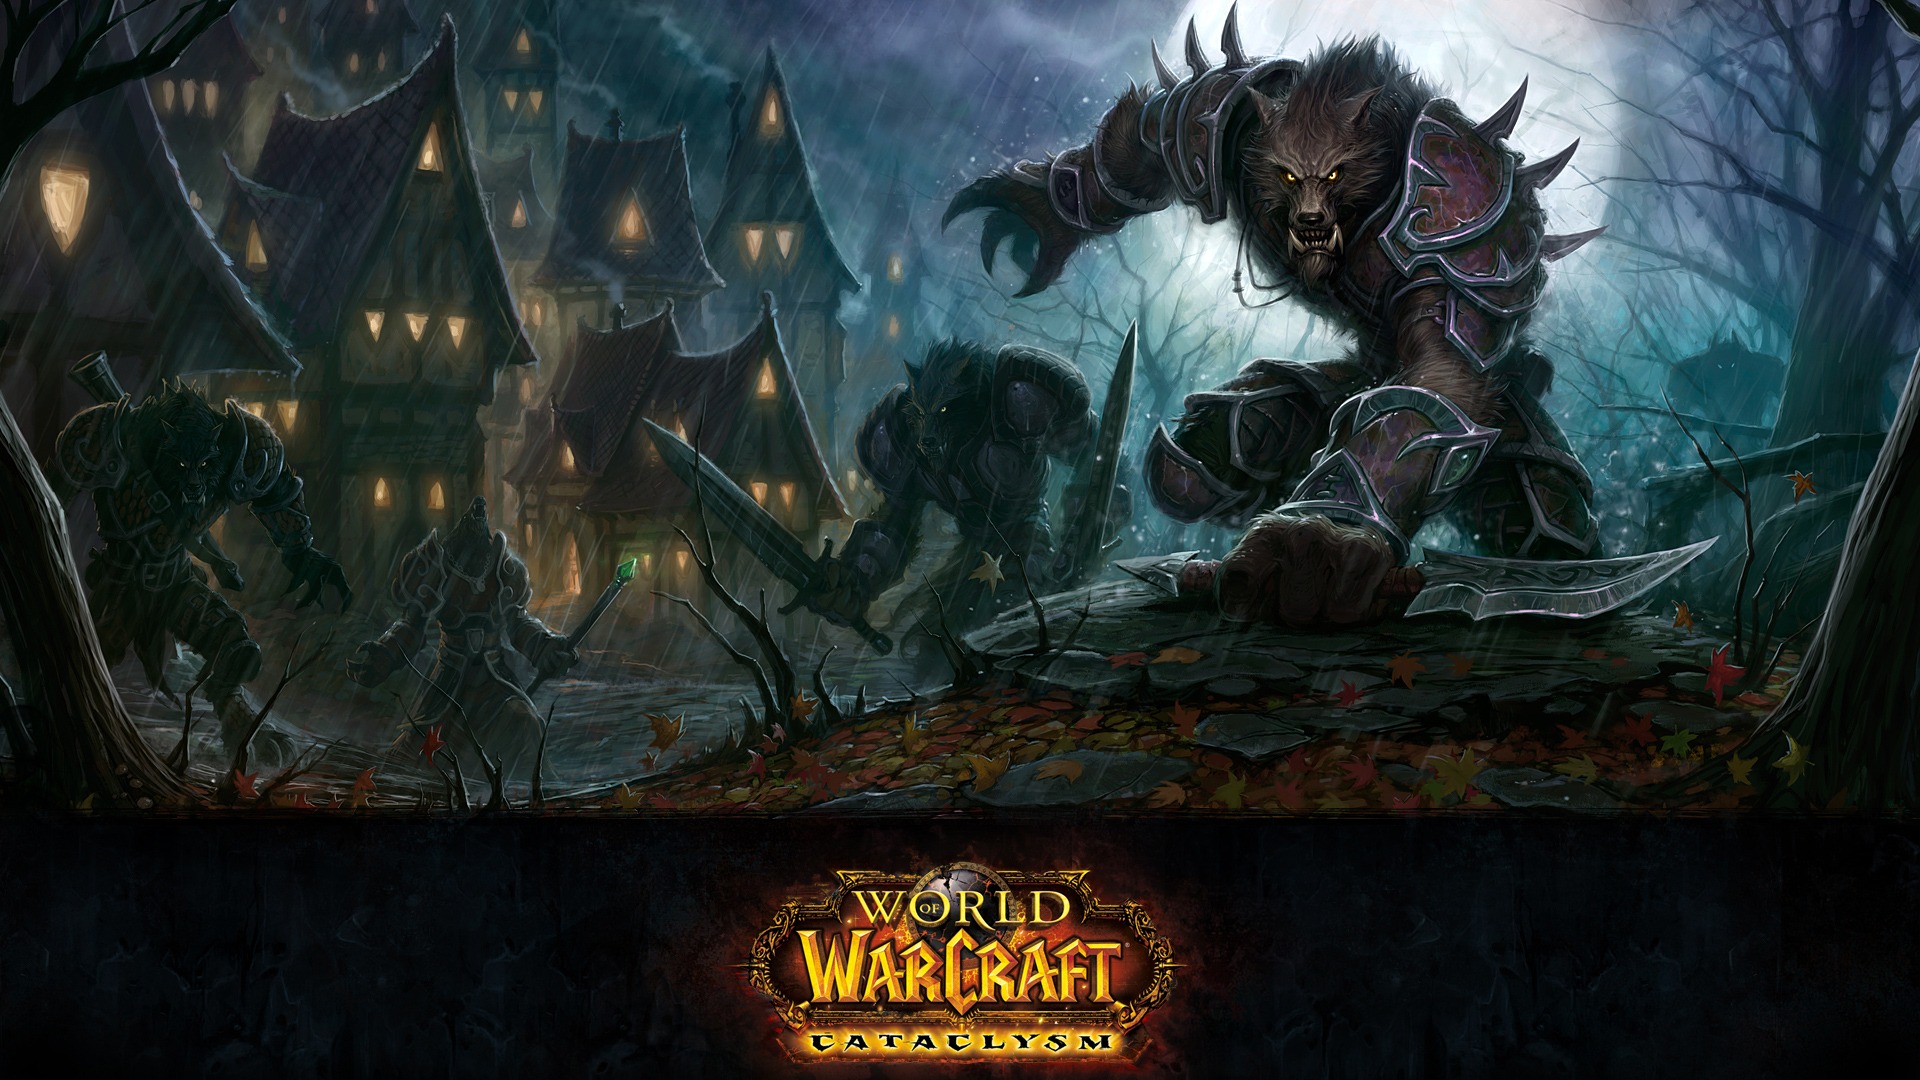 World of Warcraft Cataclysm 1080p Wallpaper World of Warcraft